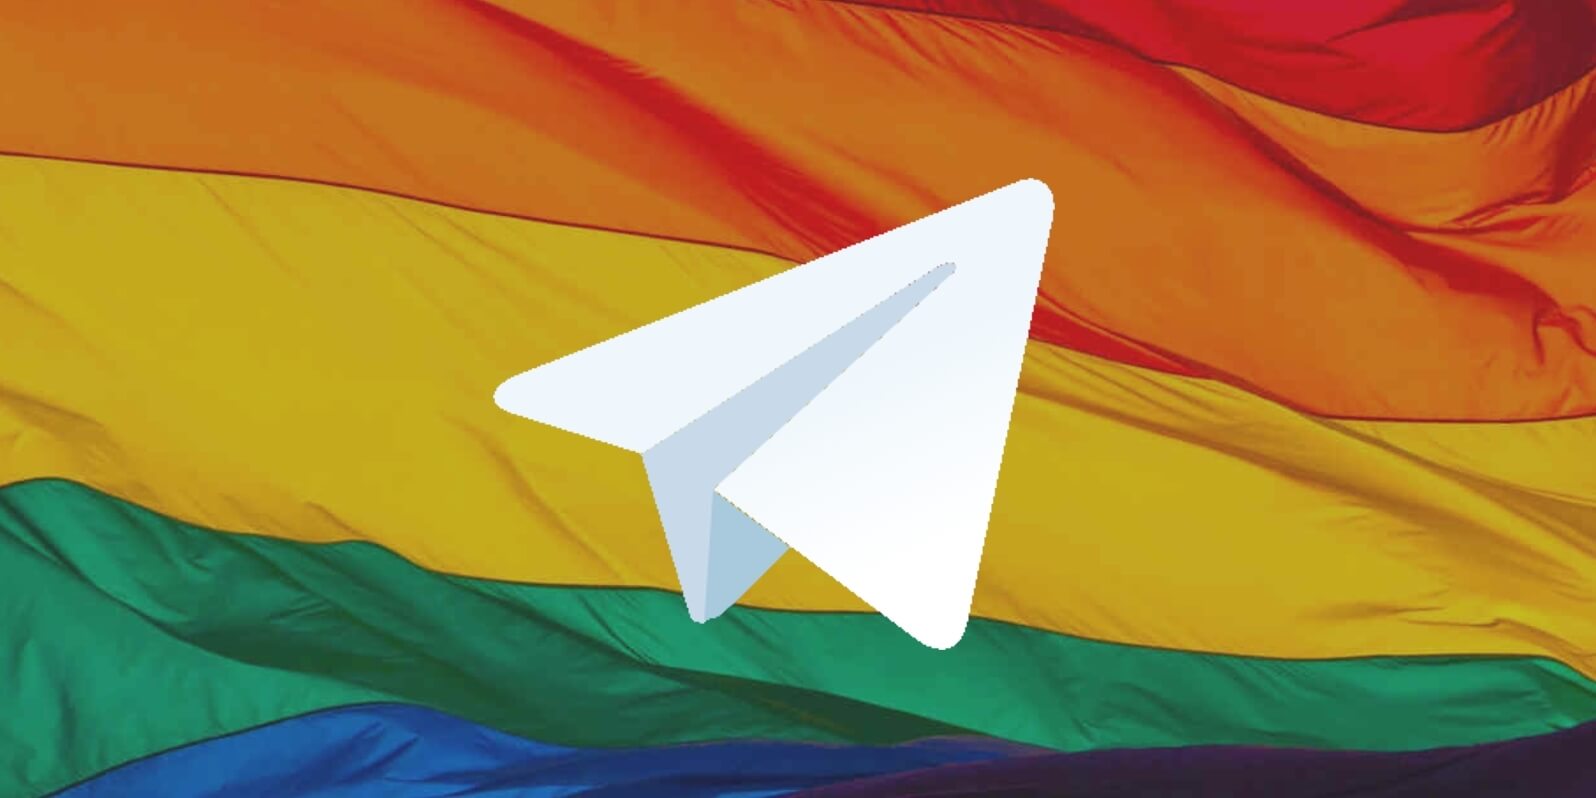 Підбірка цікавих гей-каналів у Telegram